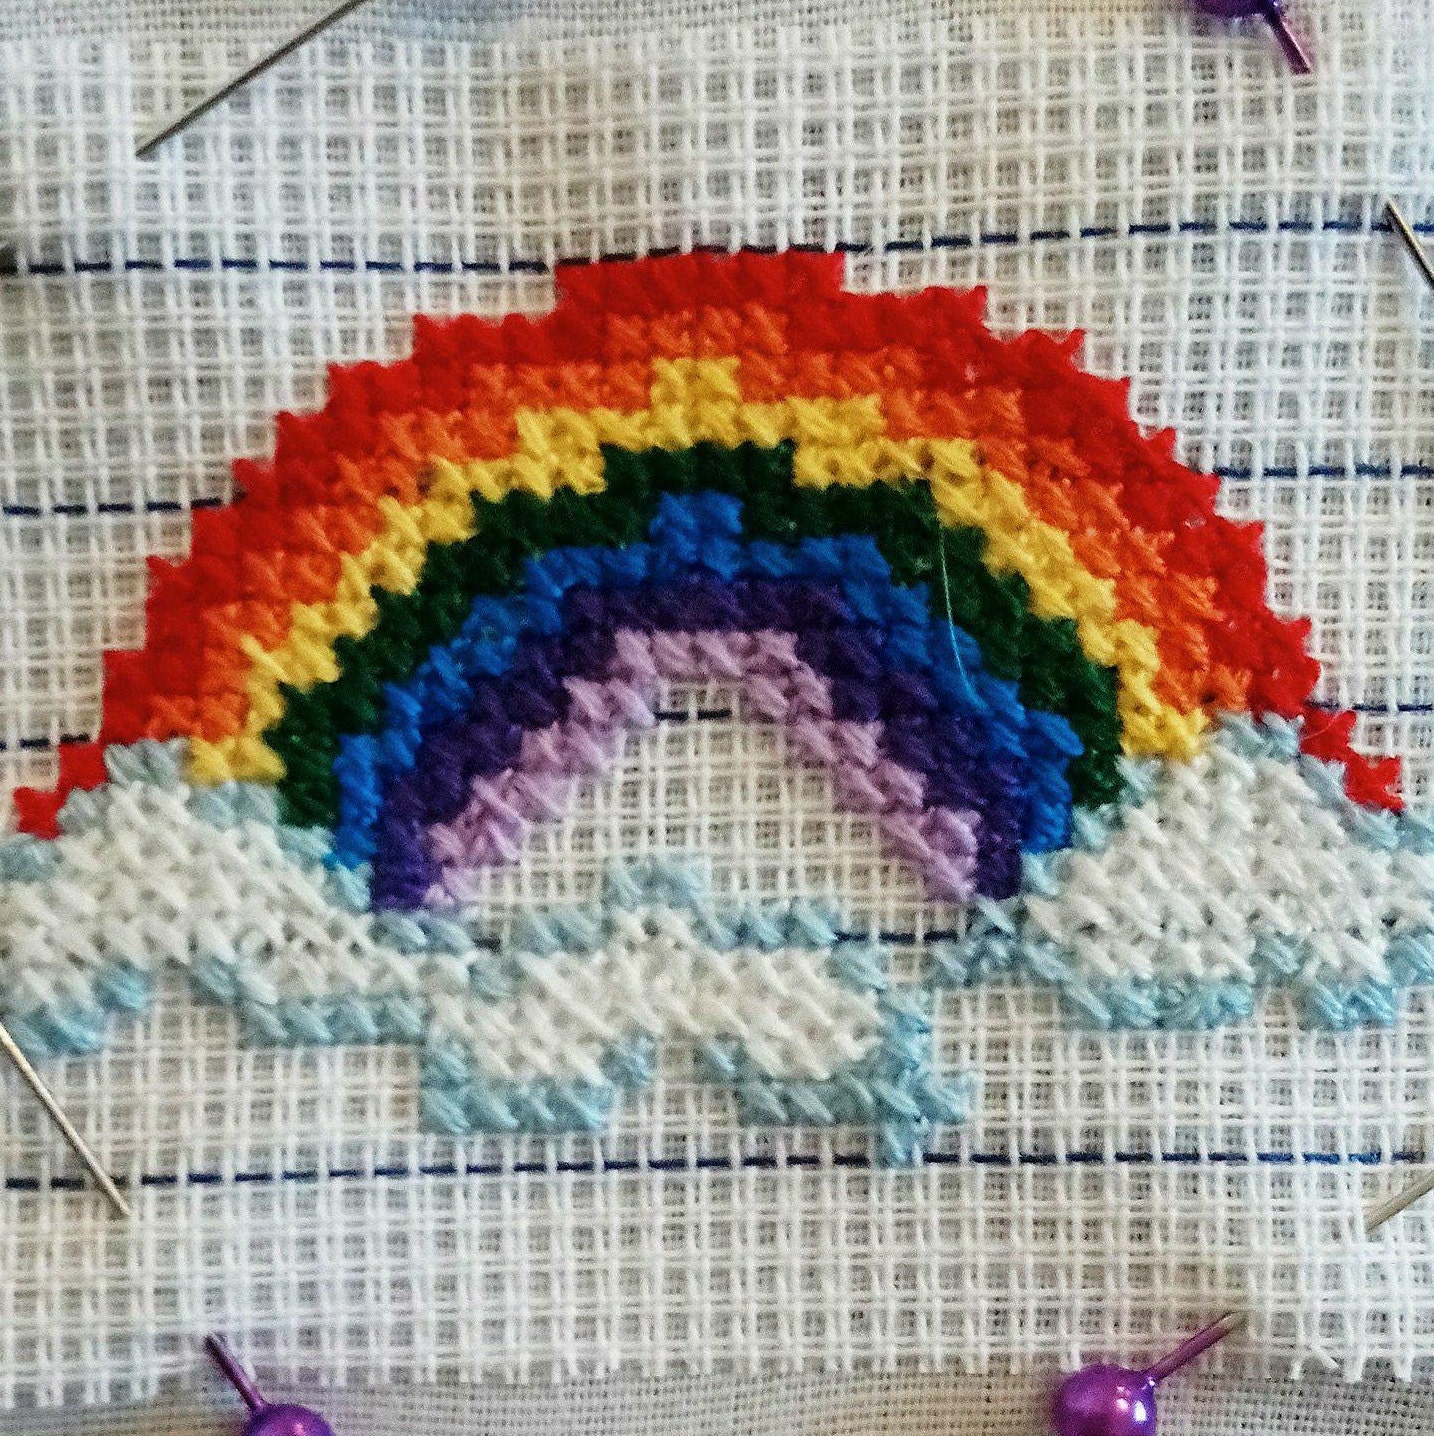 Cross stitch kit - Rainbow cross stitch kit - kids cross stitch